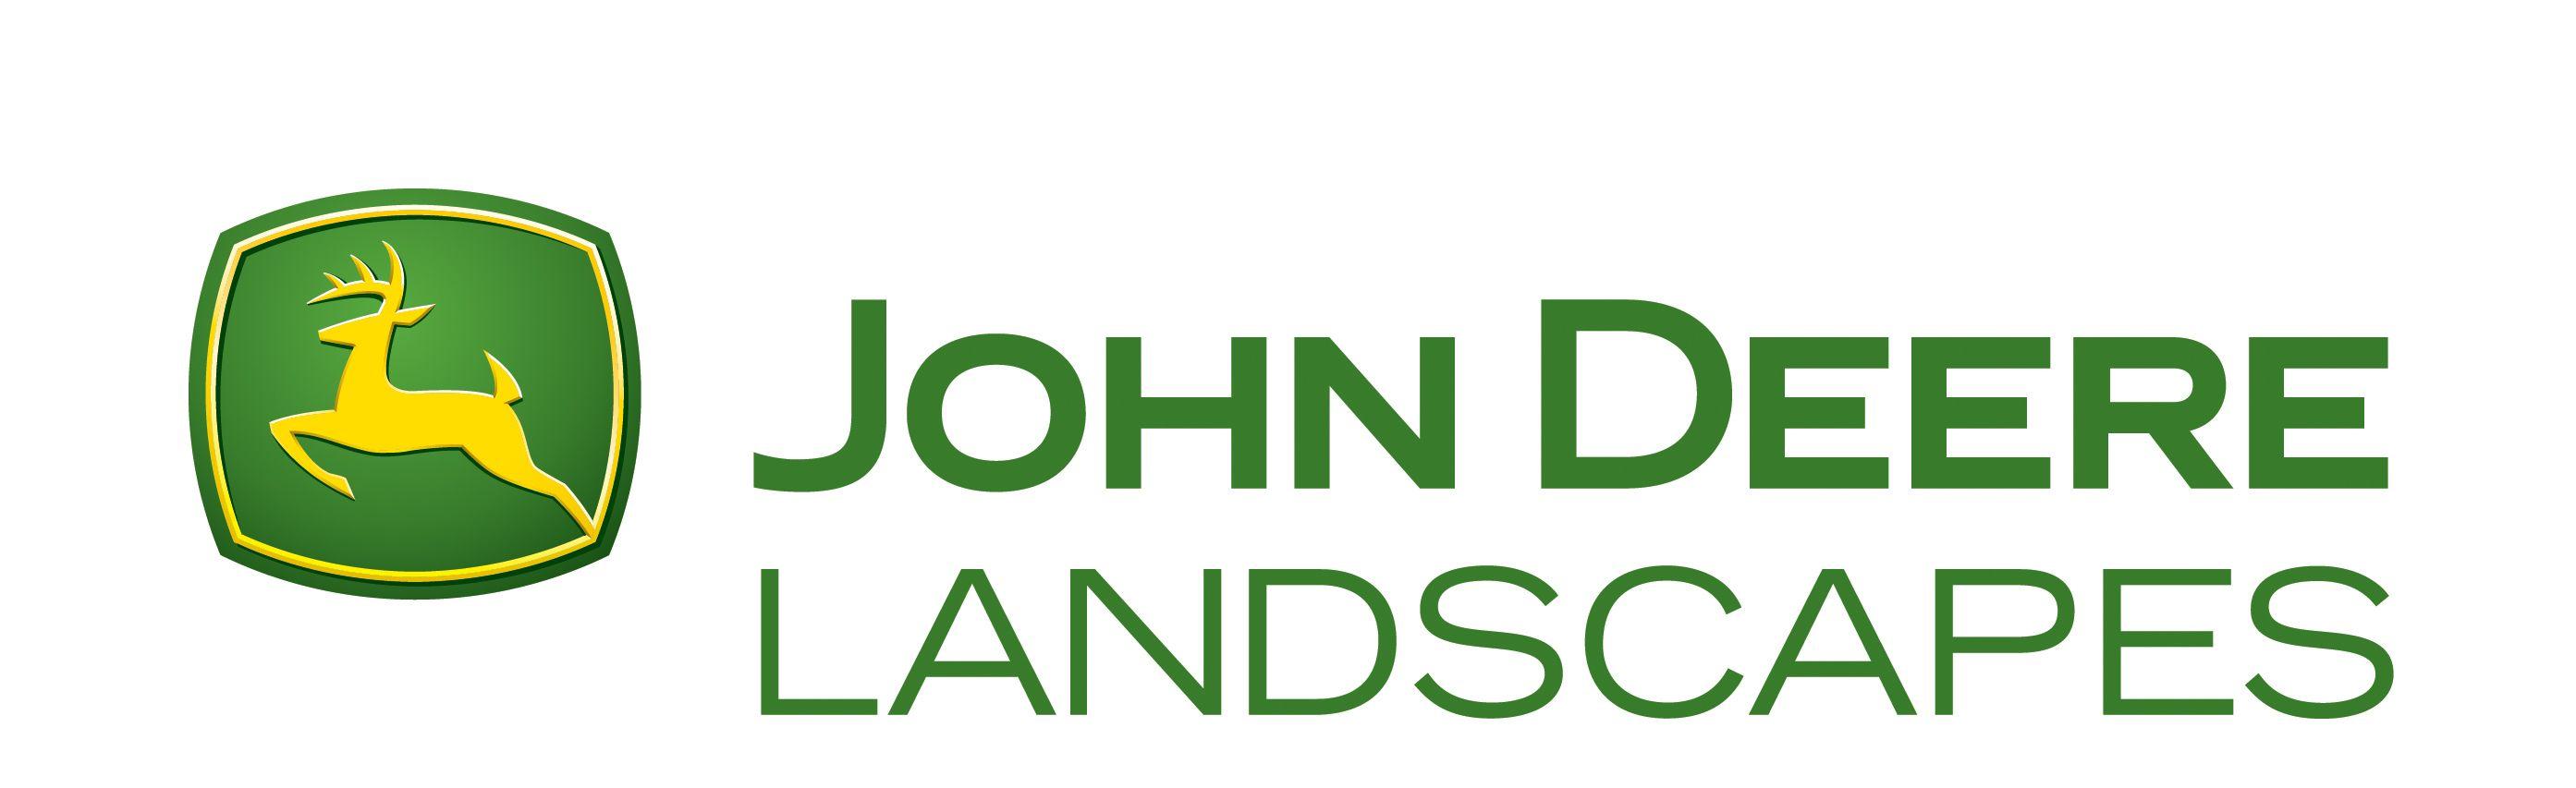 Small John Deere Logo - John Deere Landscapes Unveils New Name as SiteOne Landscape Supply